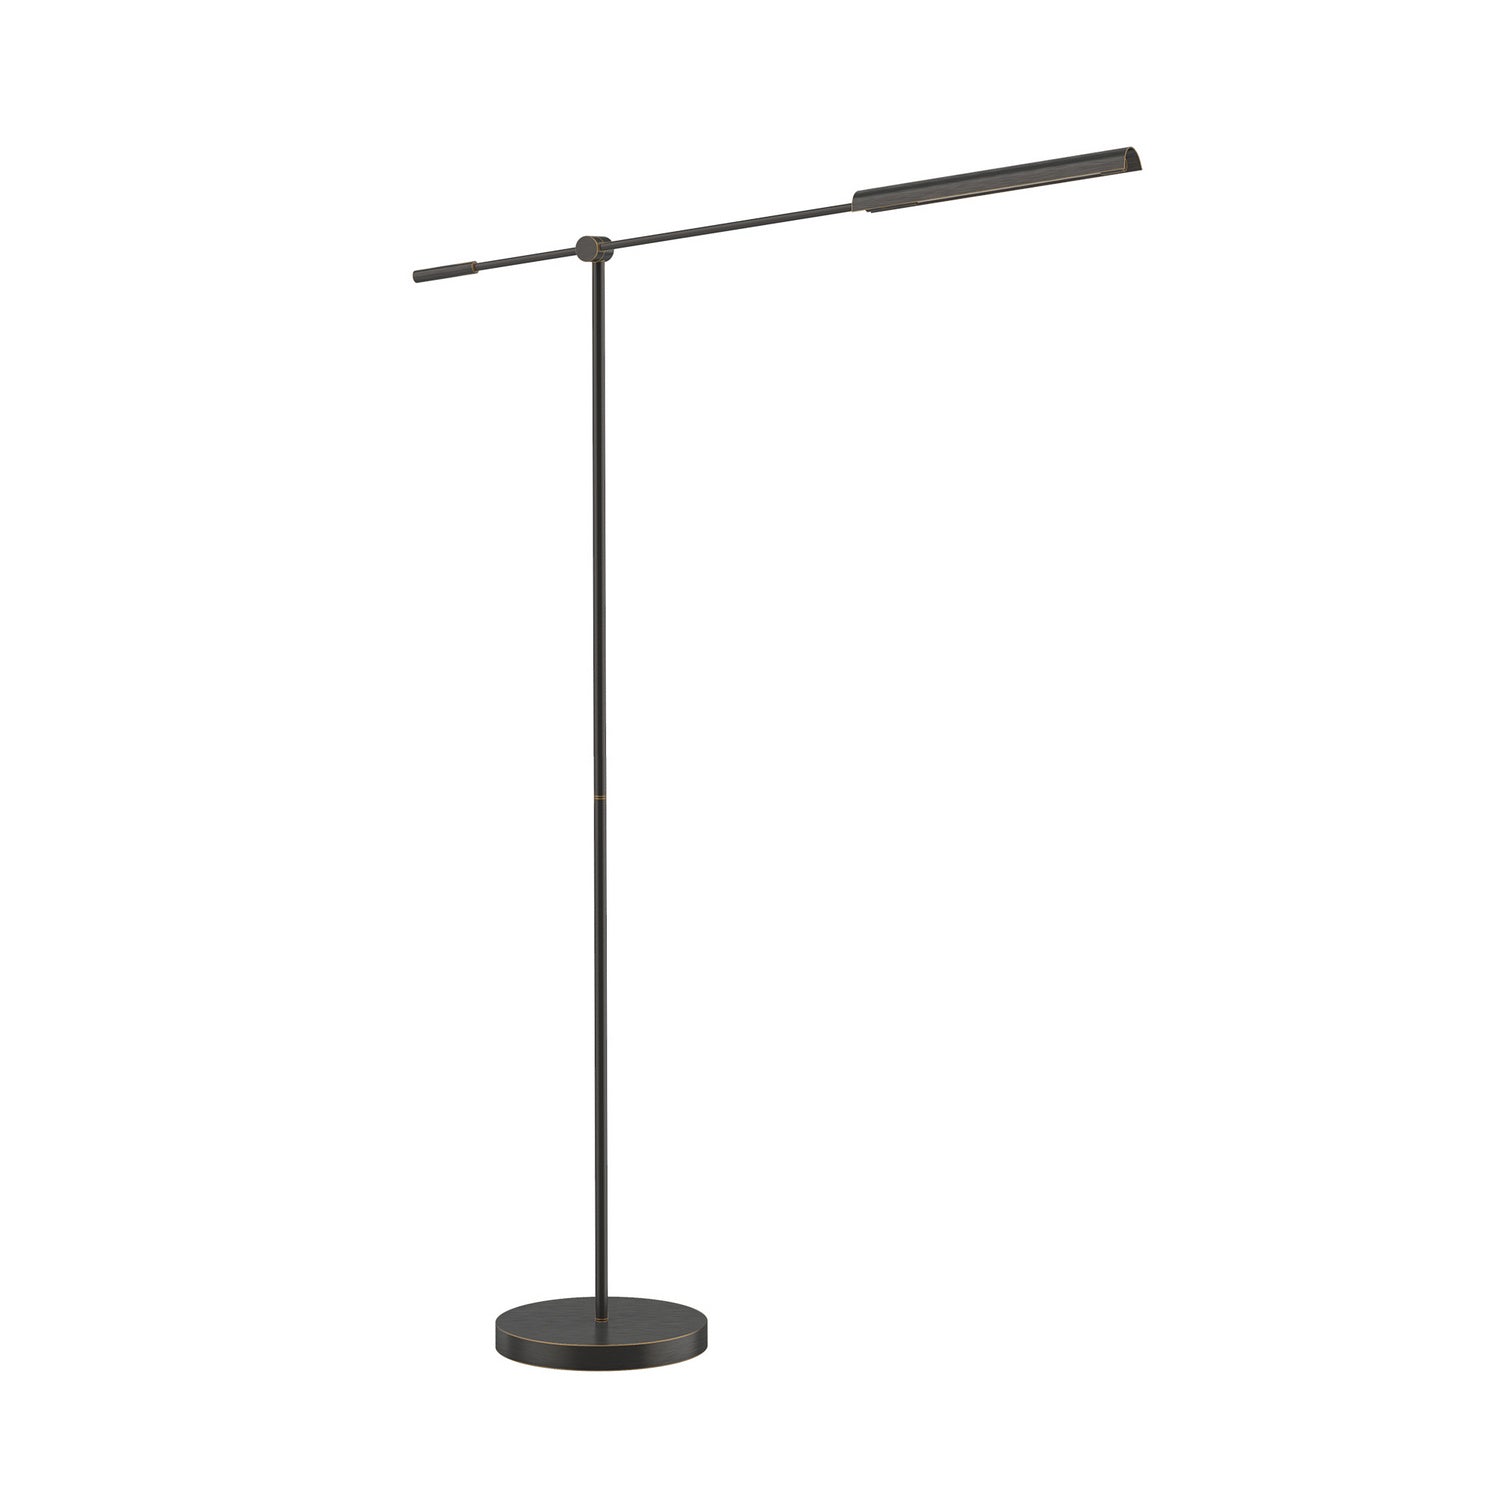 Alora - FL316655UBMS - LED Lamp - Astrid - Metal Shade/Urban Bronze